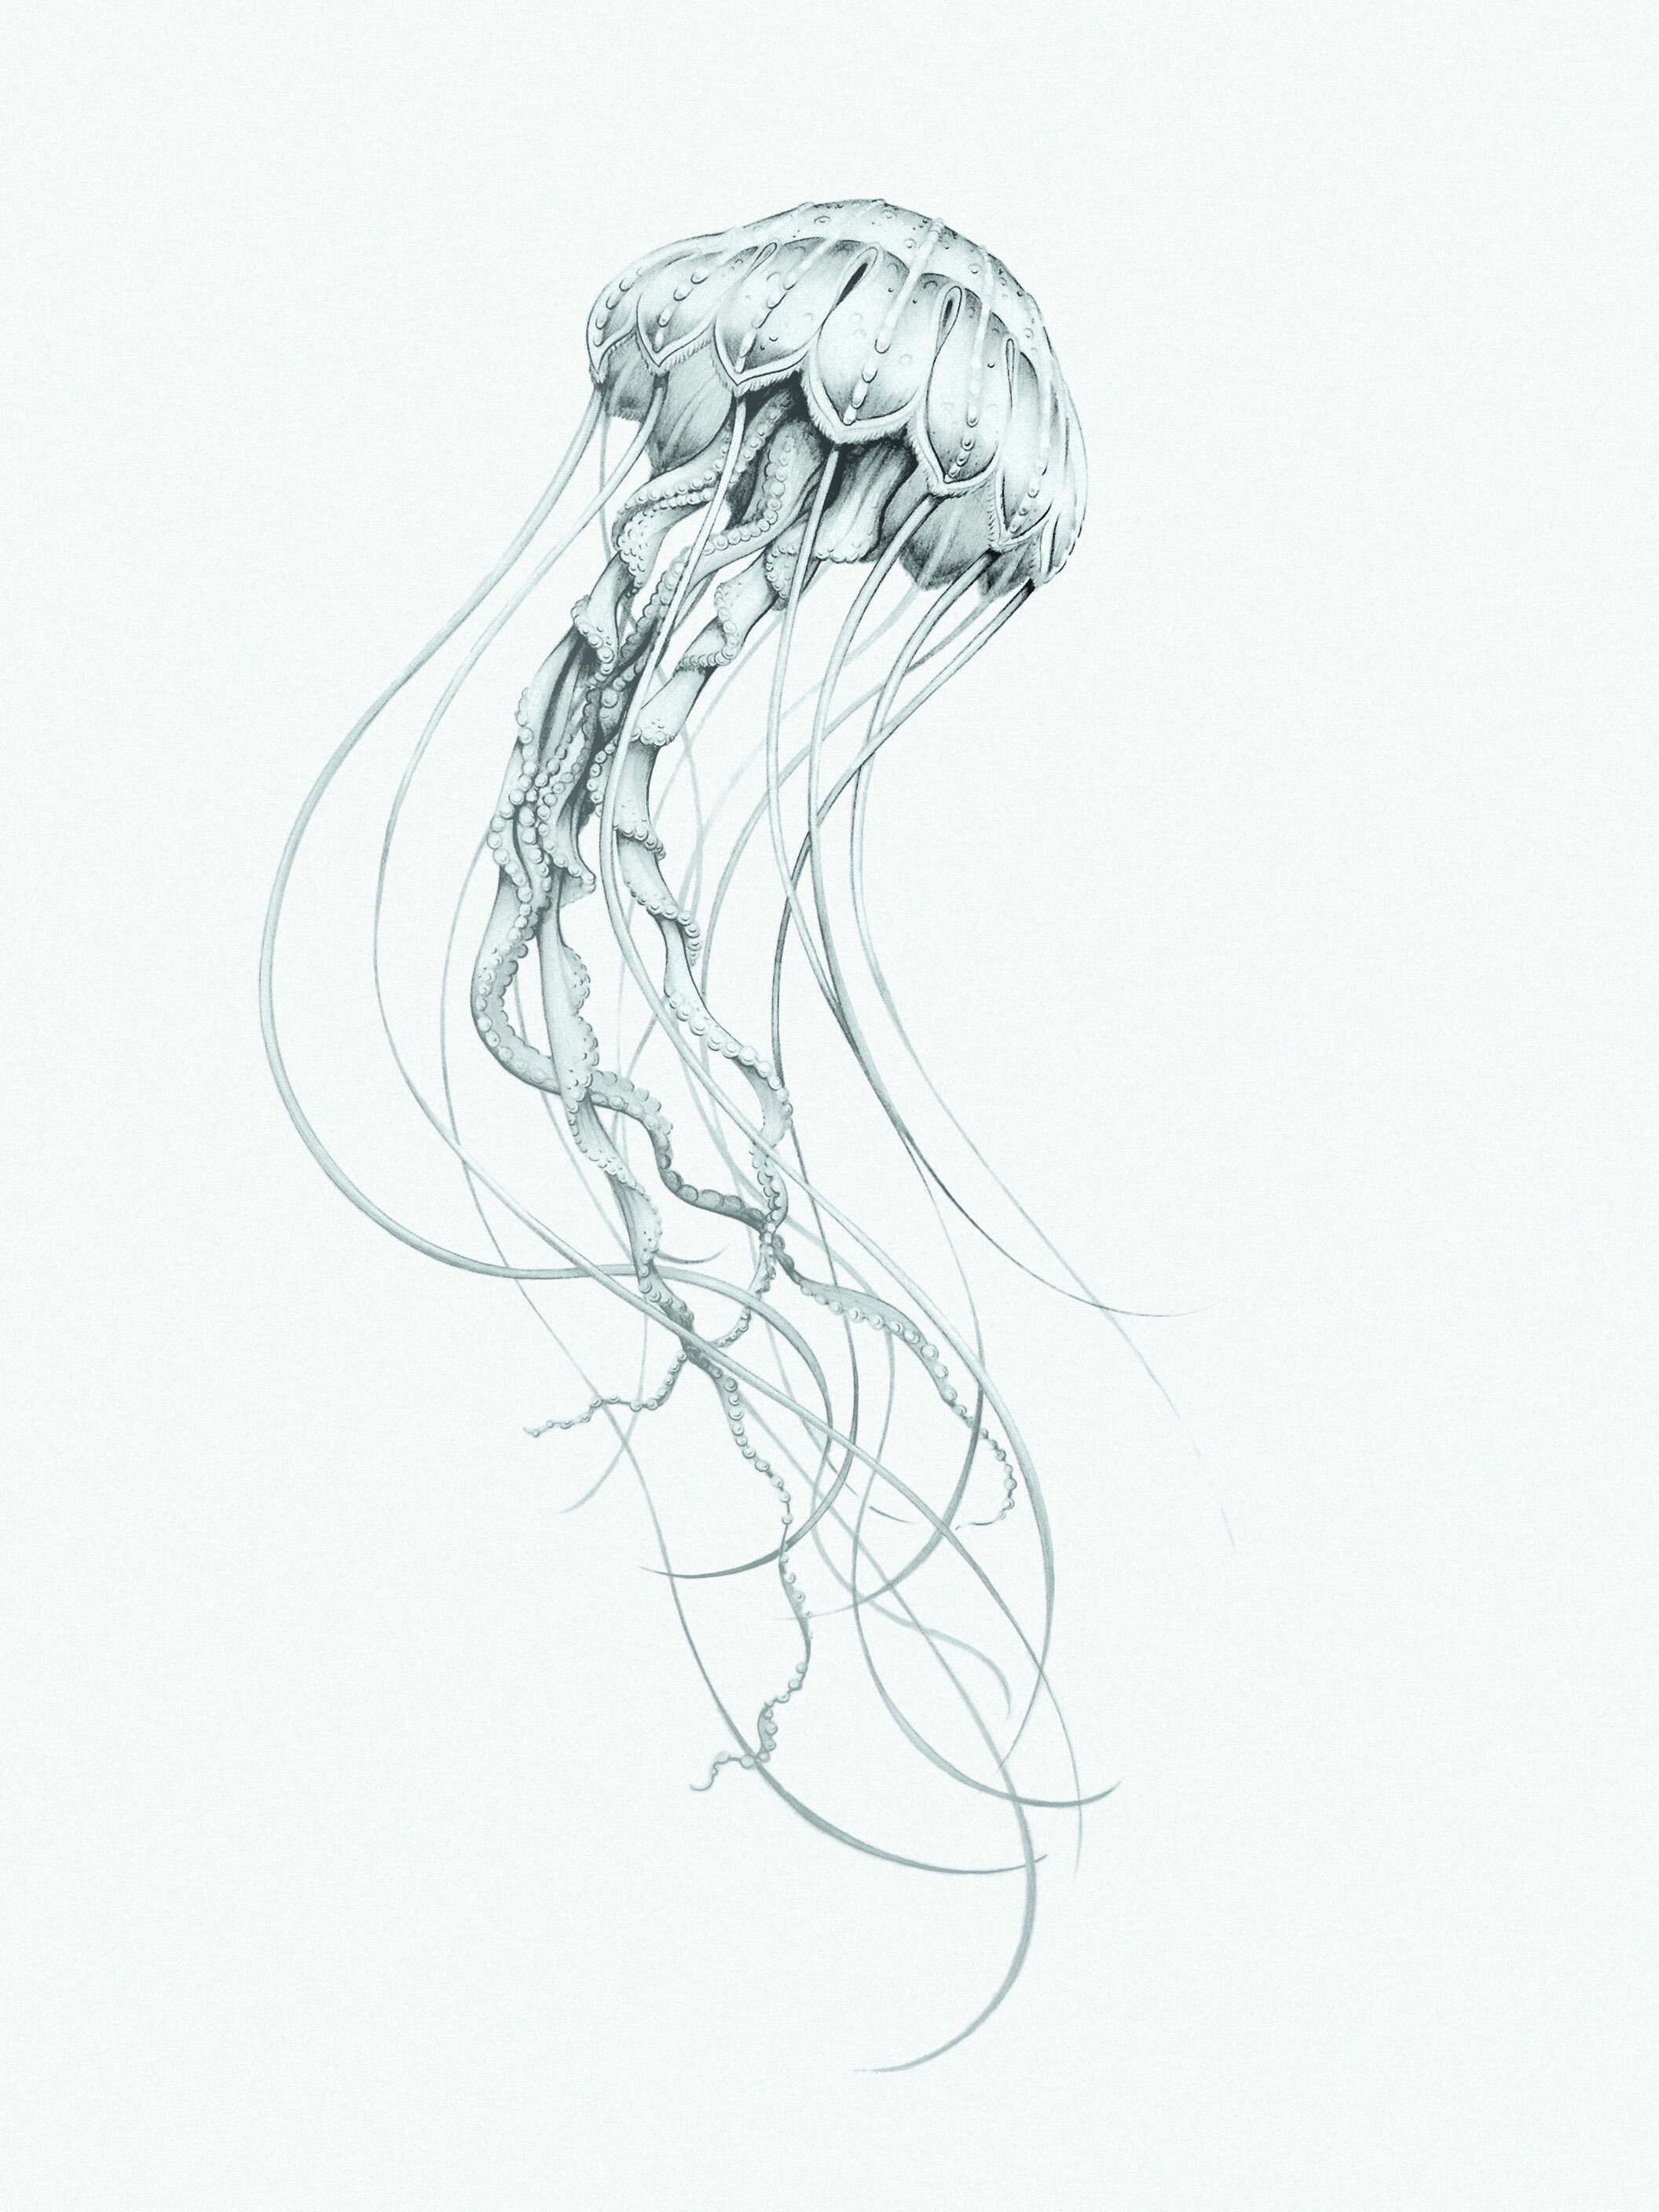 Jellyfish Study, 18" x 24", pencil on paper, 2006